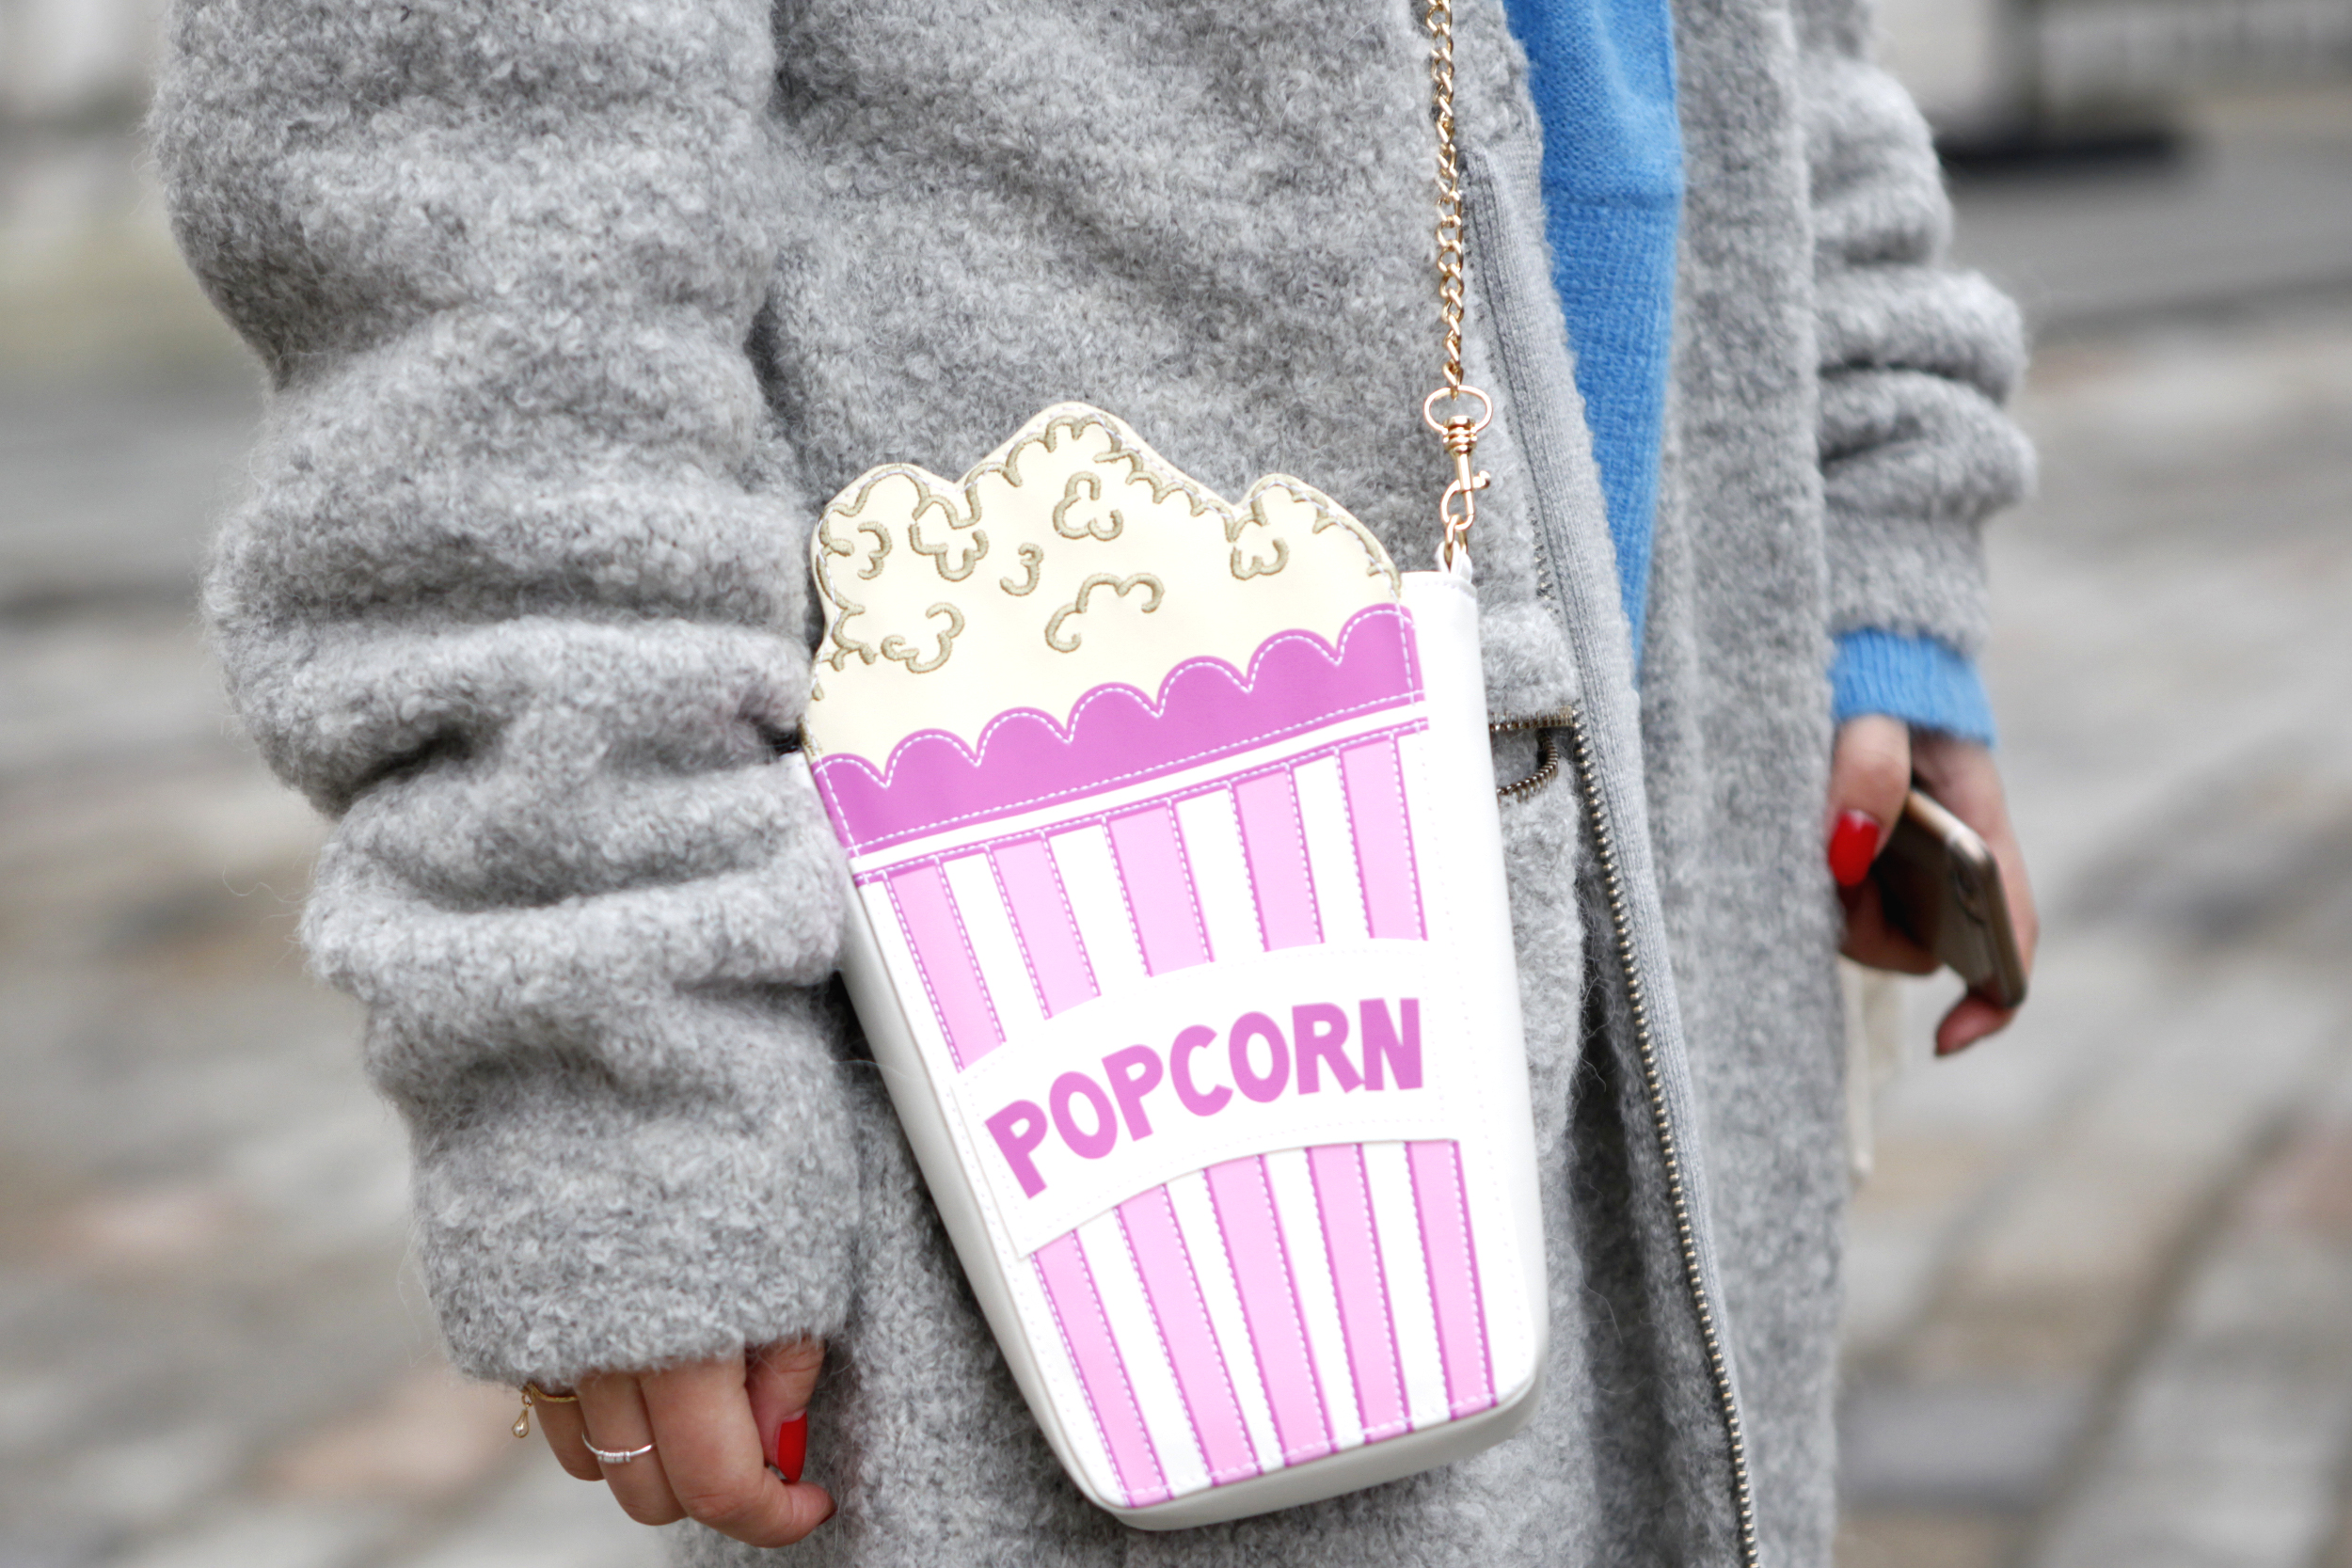 Tasche in Popcorntüten-Form als Street Style in London